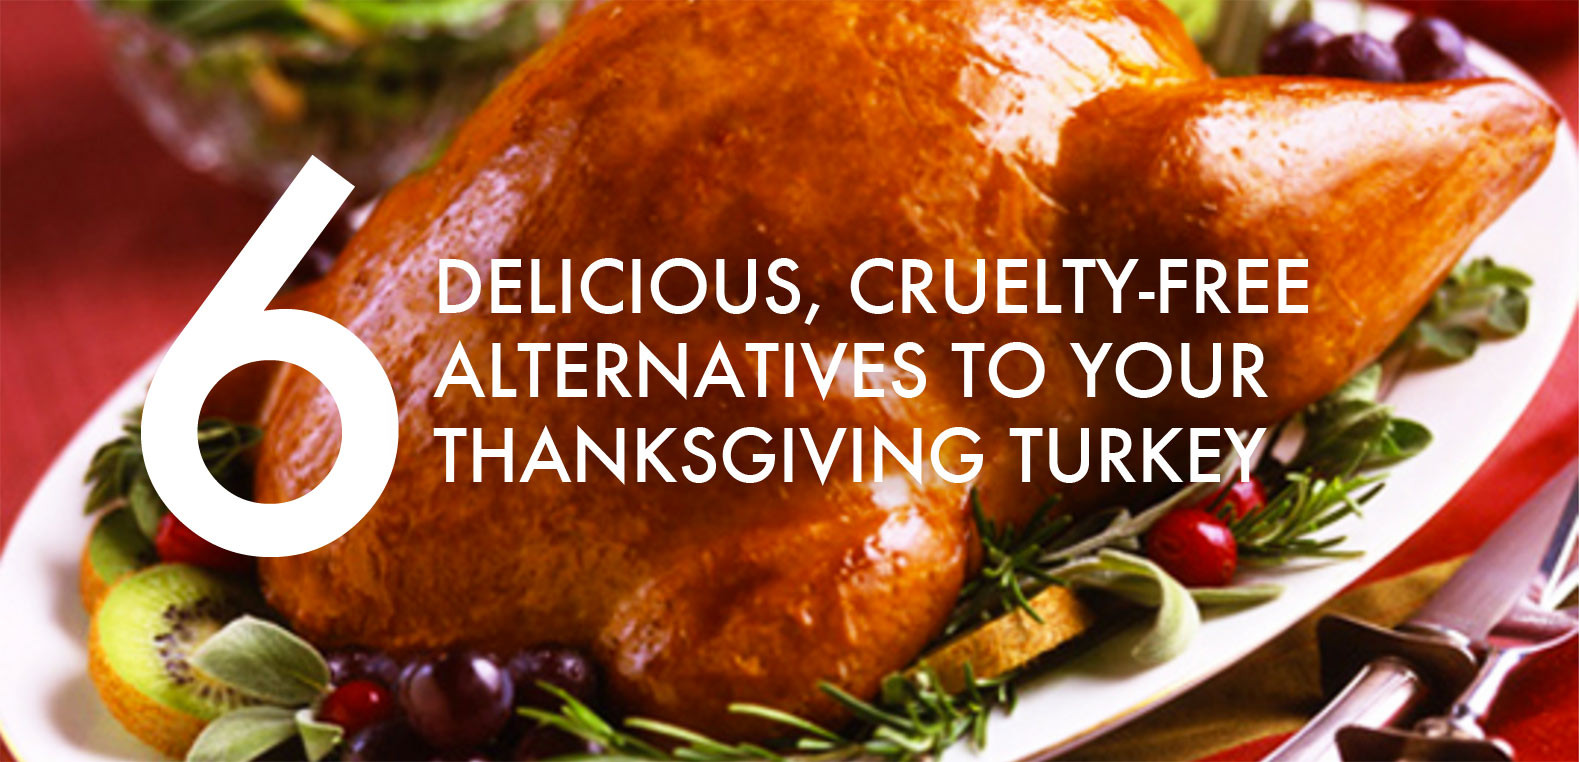 Alternatives To Turkey On Thanksgiving
 6 Vegan and ve arian turkey alternatives for